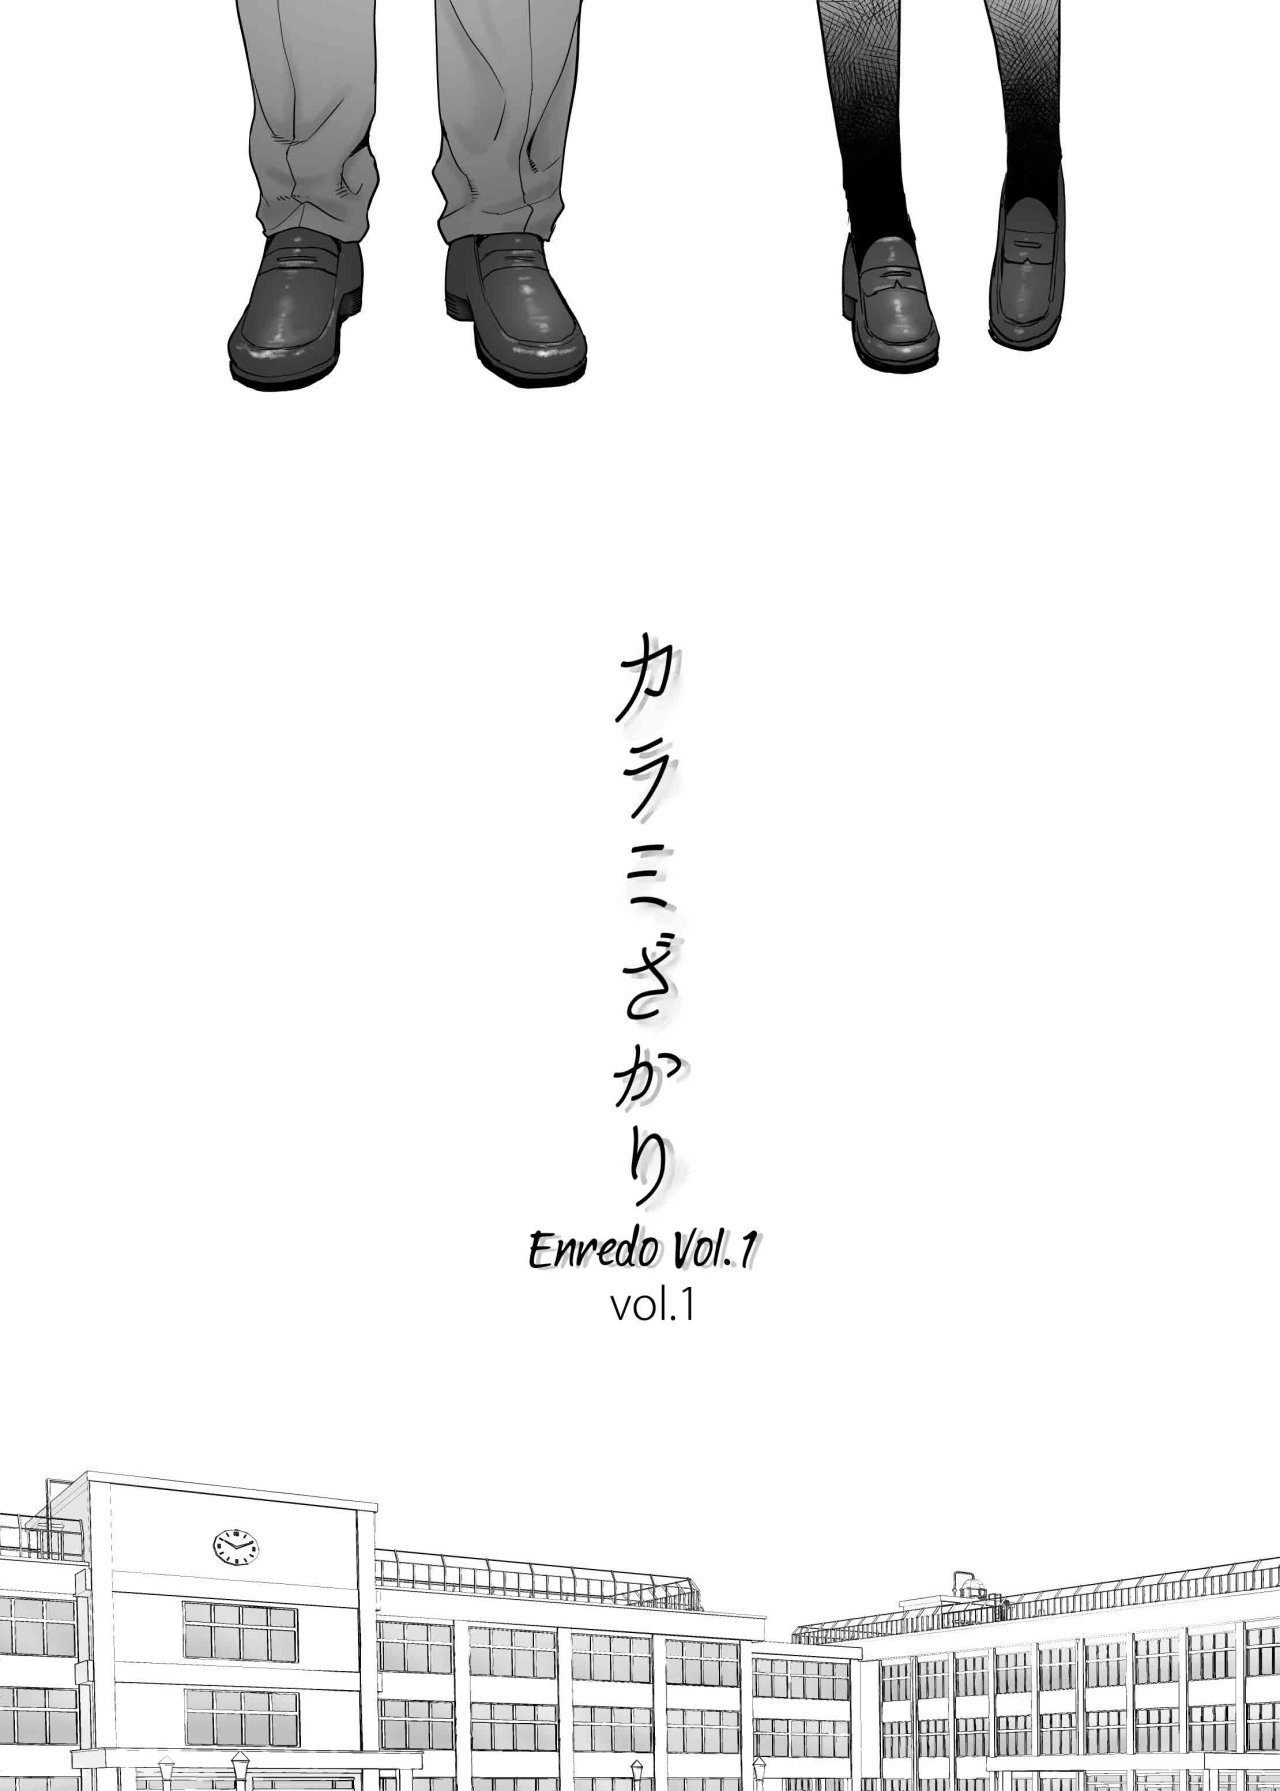 Karami Zakari Vol 1 - Enredo Vol 1 - 2